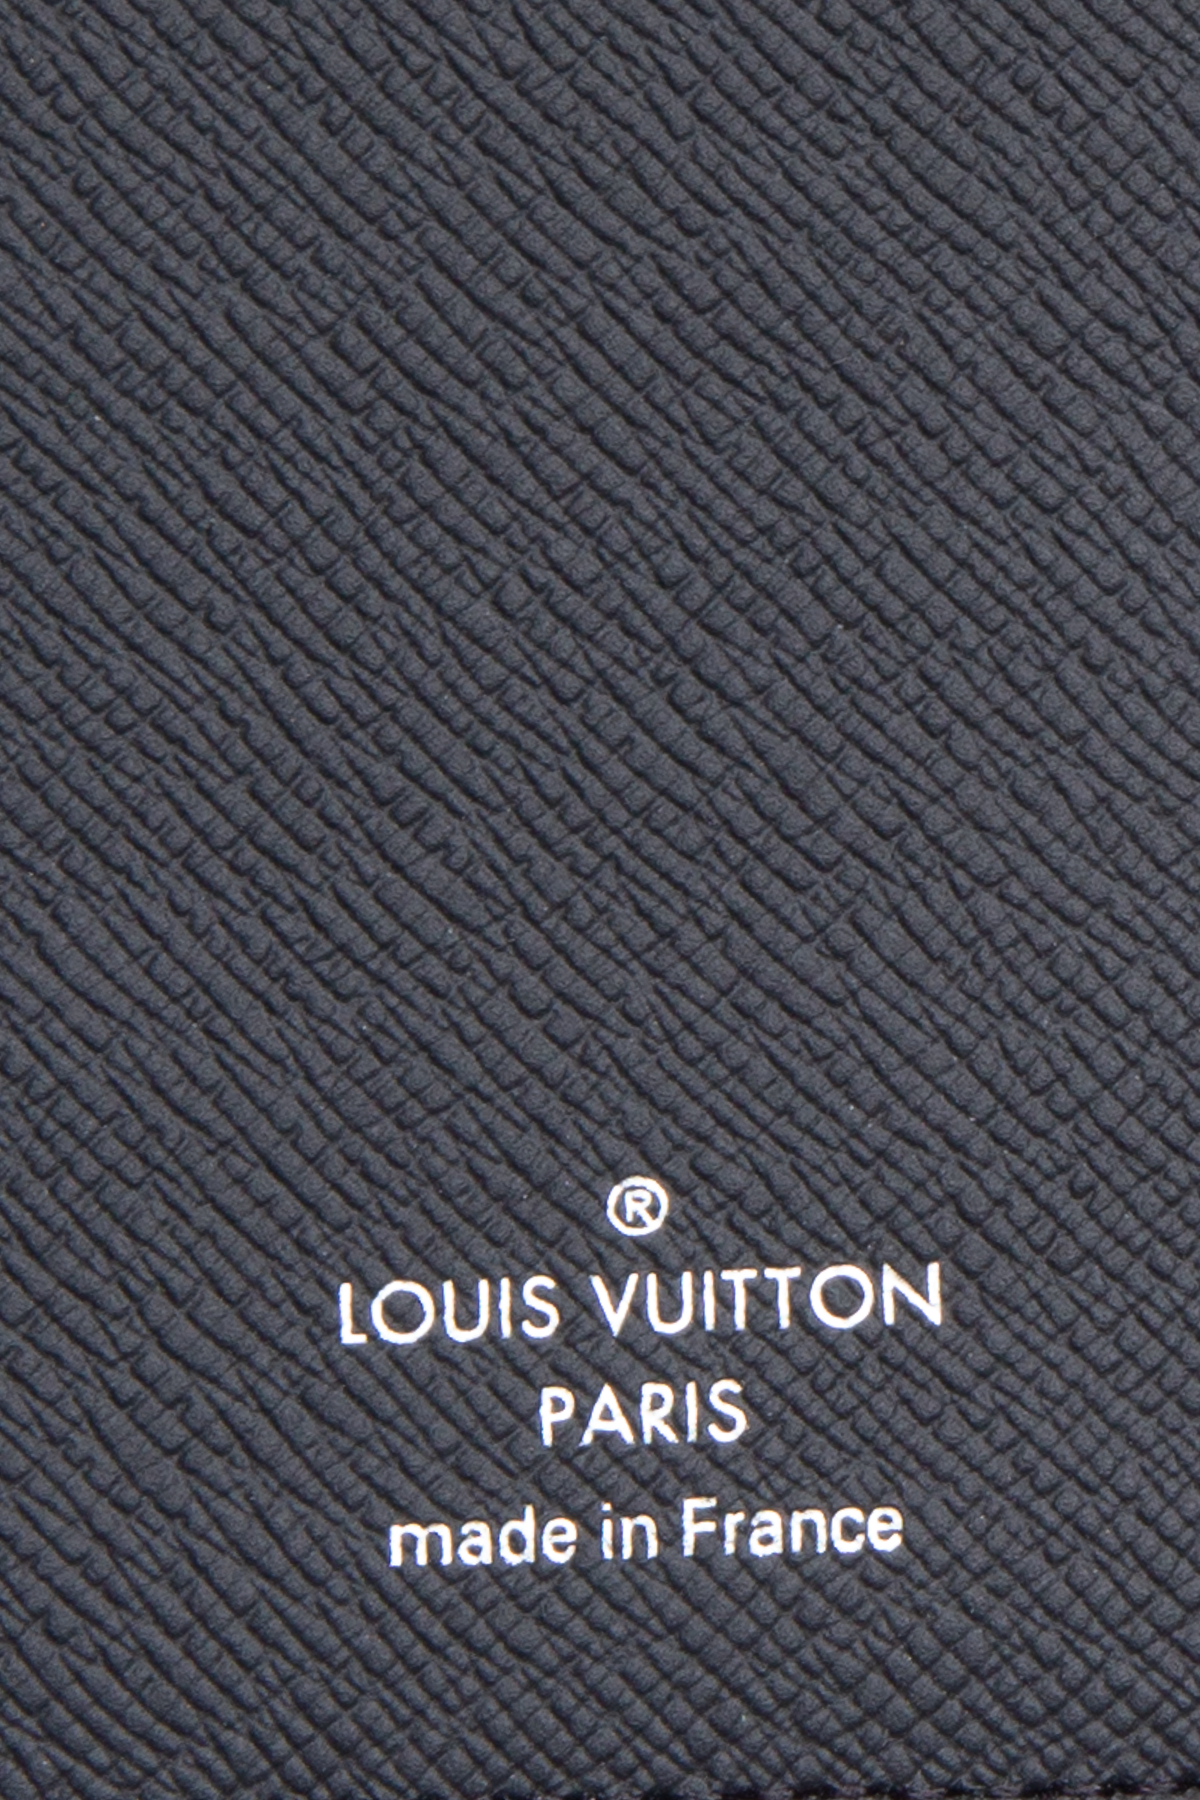 FAQ: How much is a Louis Vuitton Desk Agenda Cover? Well, I